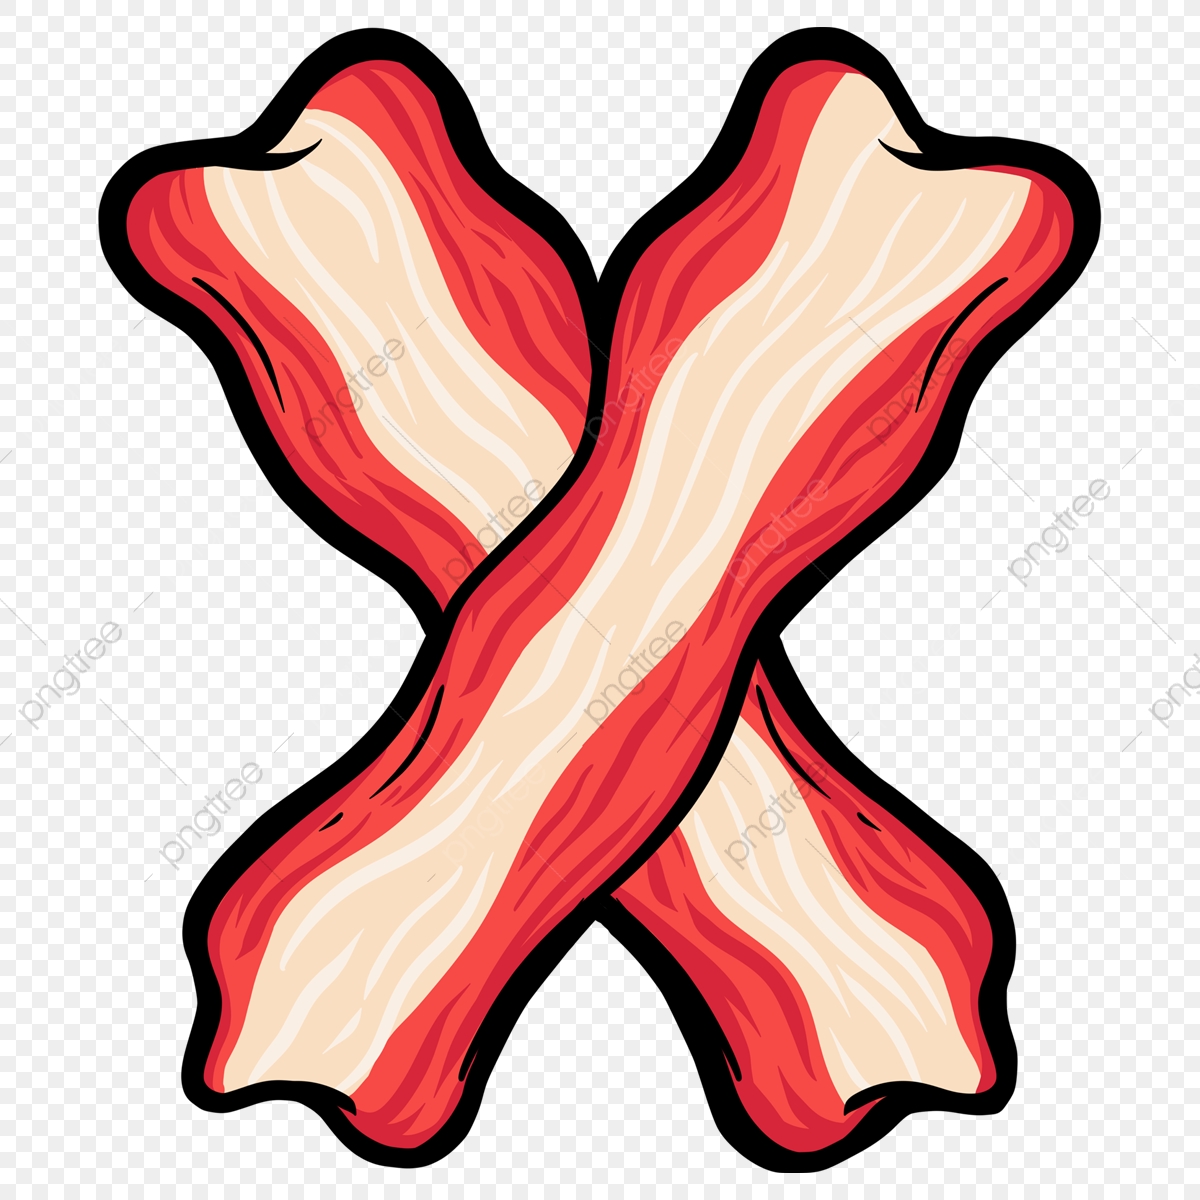 Cartoondesign cartoon tshirtdesign png. Bacon clipart sliced